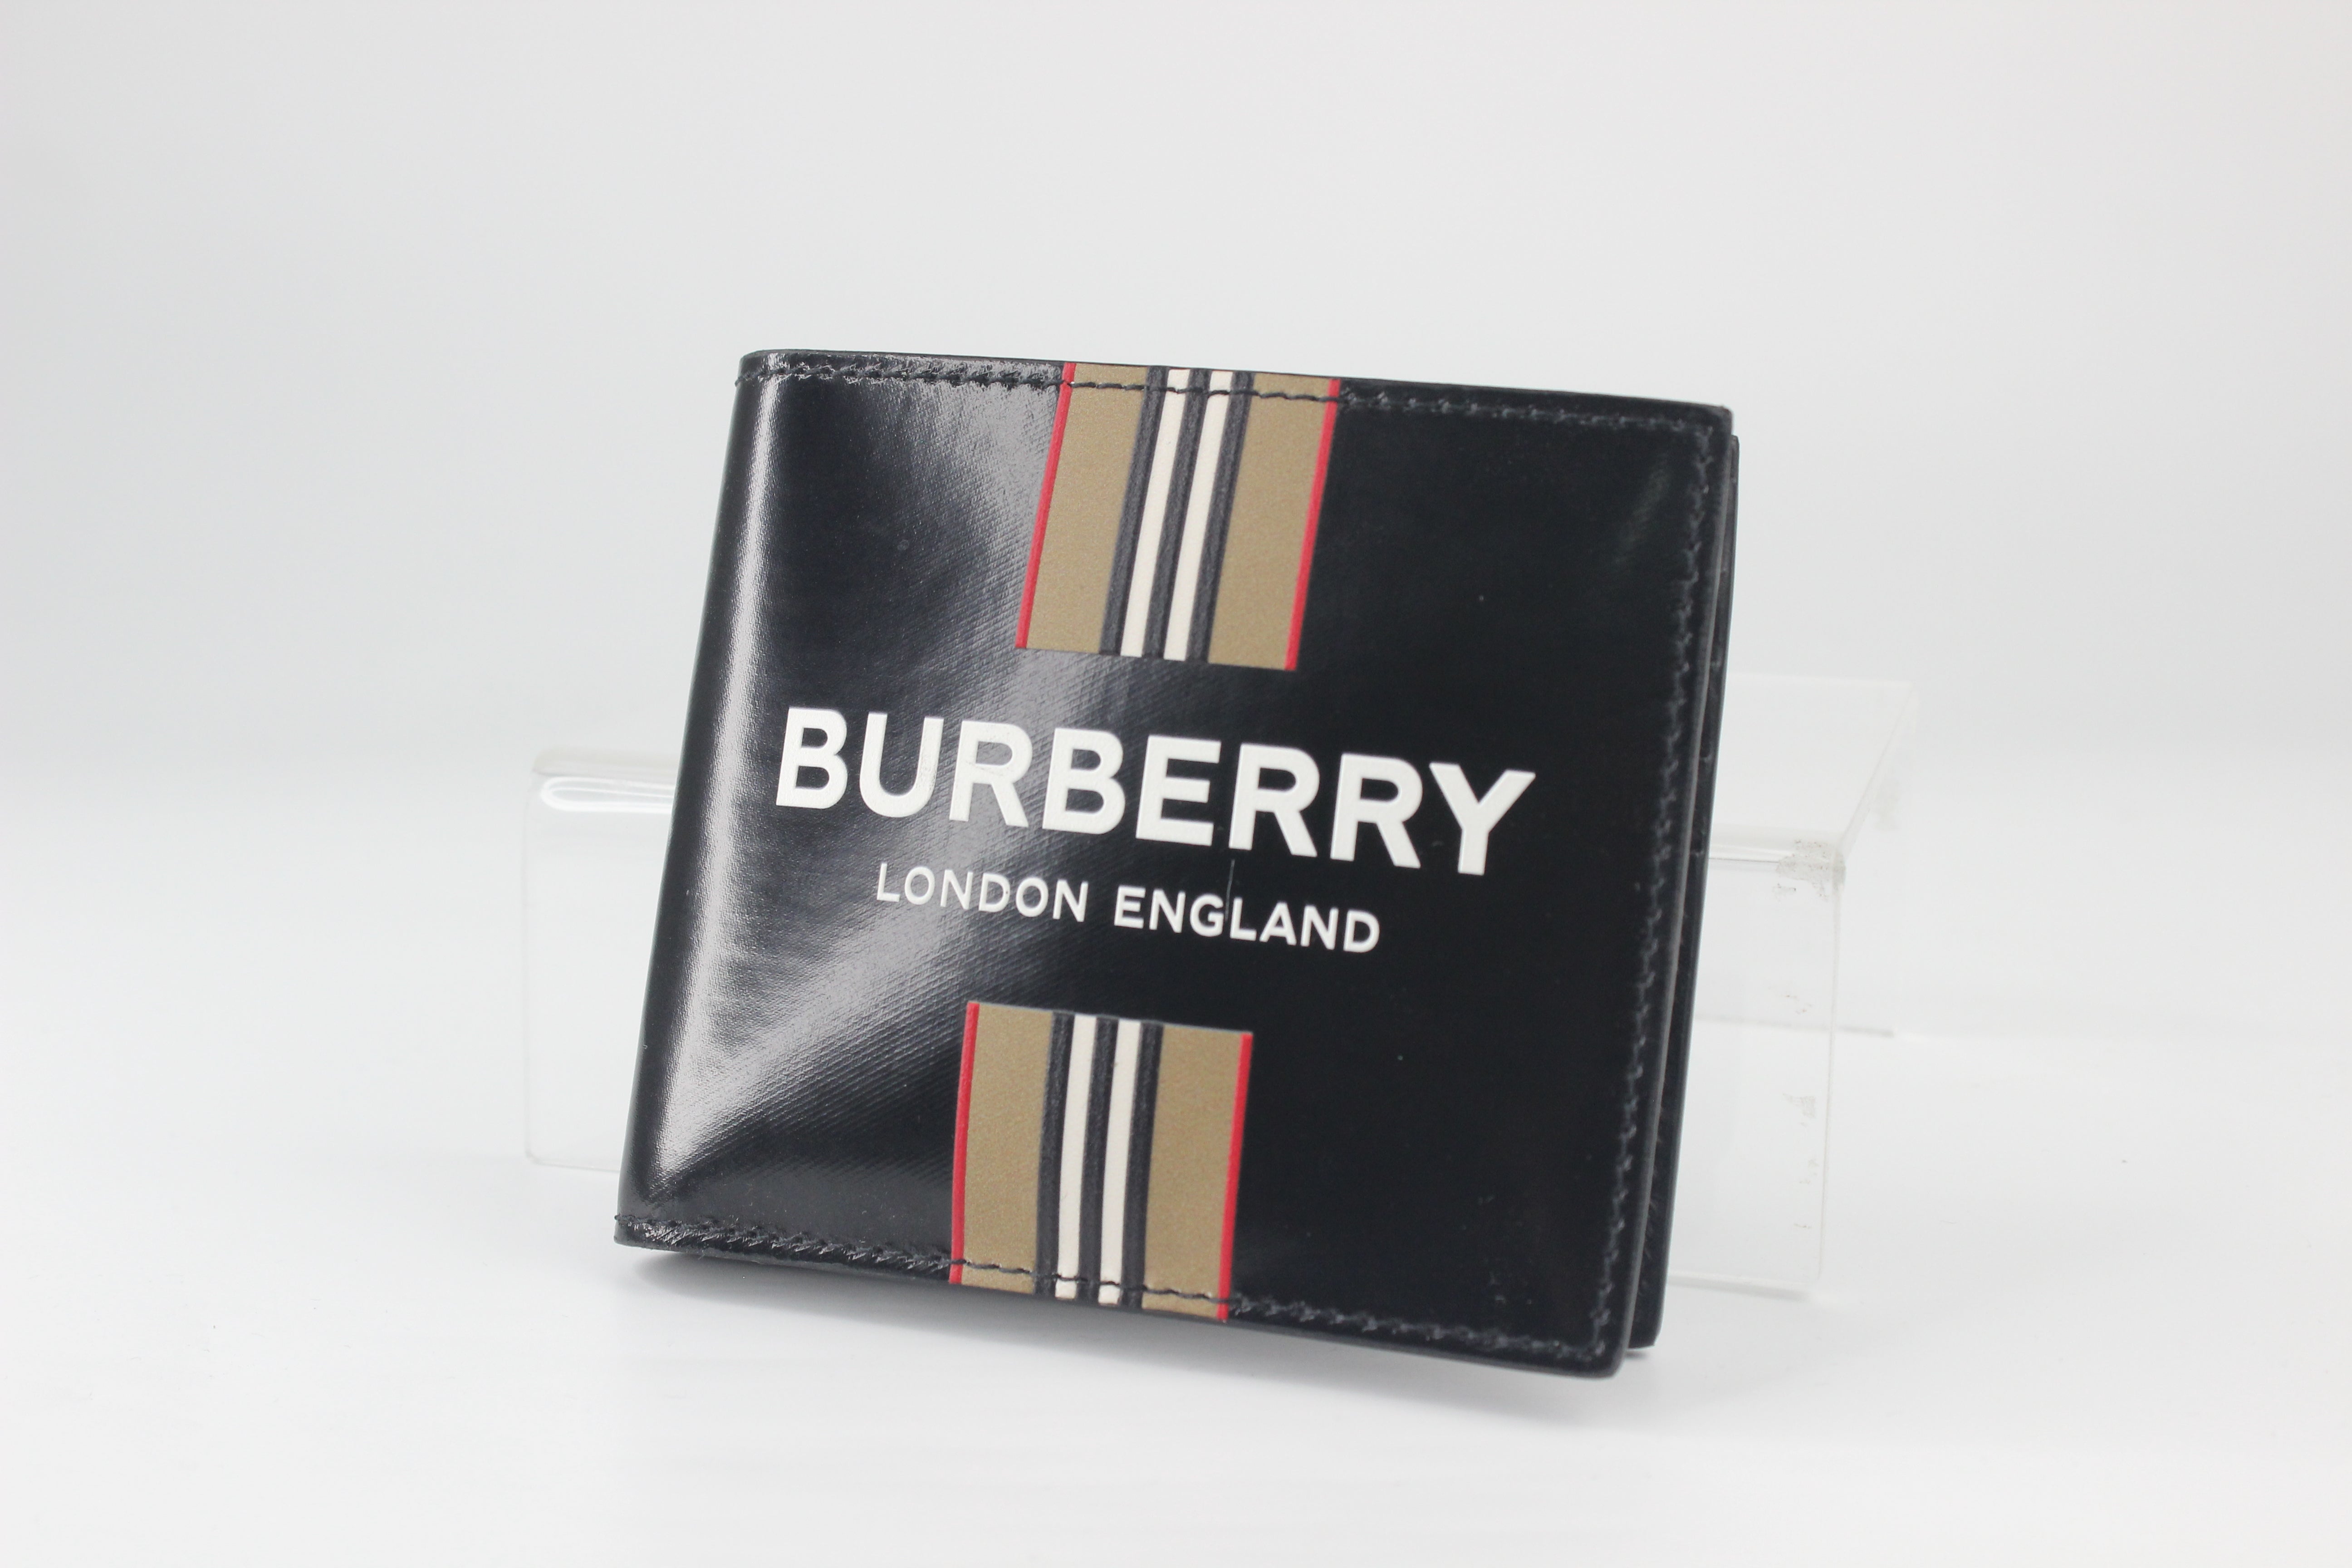 Actualizar 46+ imagen burberry london england wallet